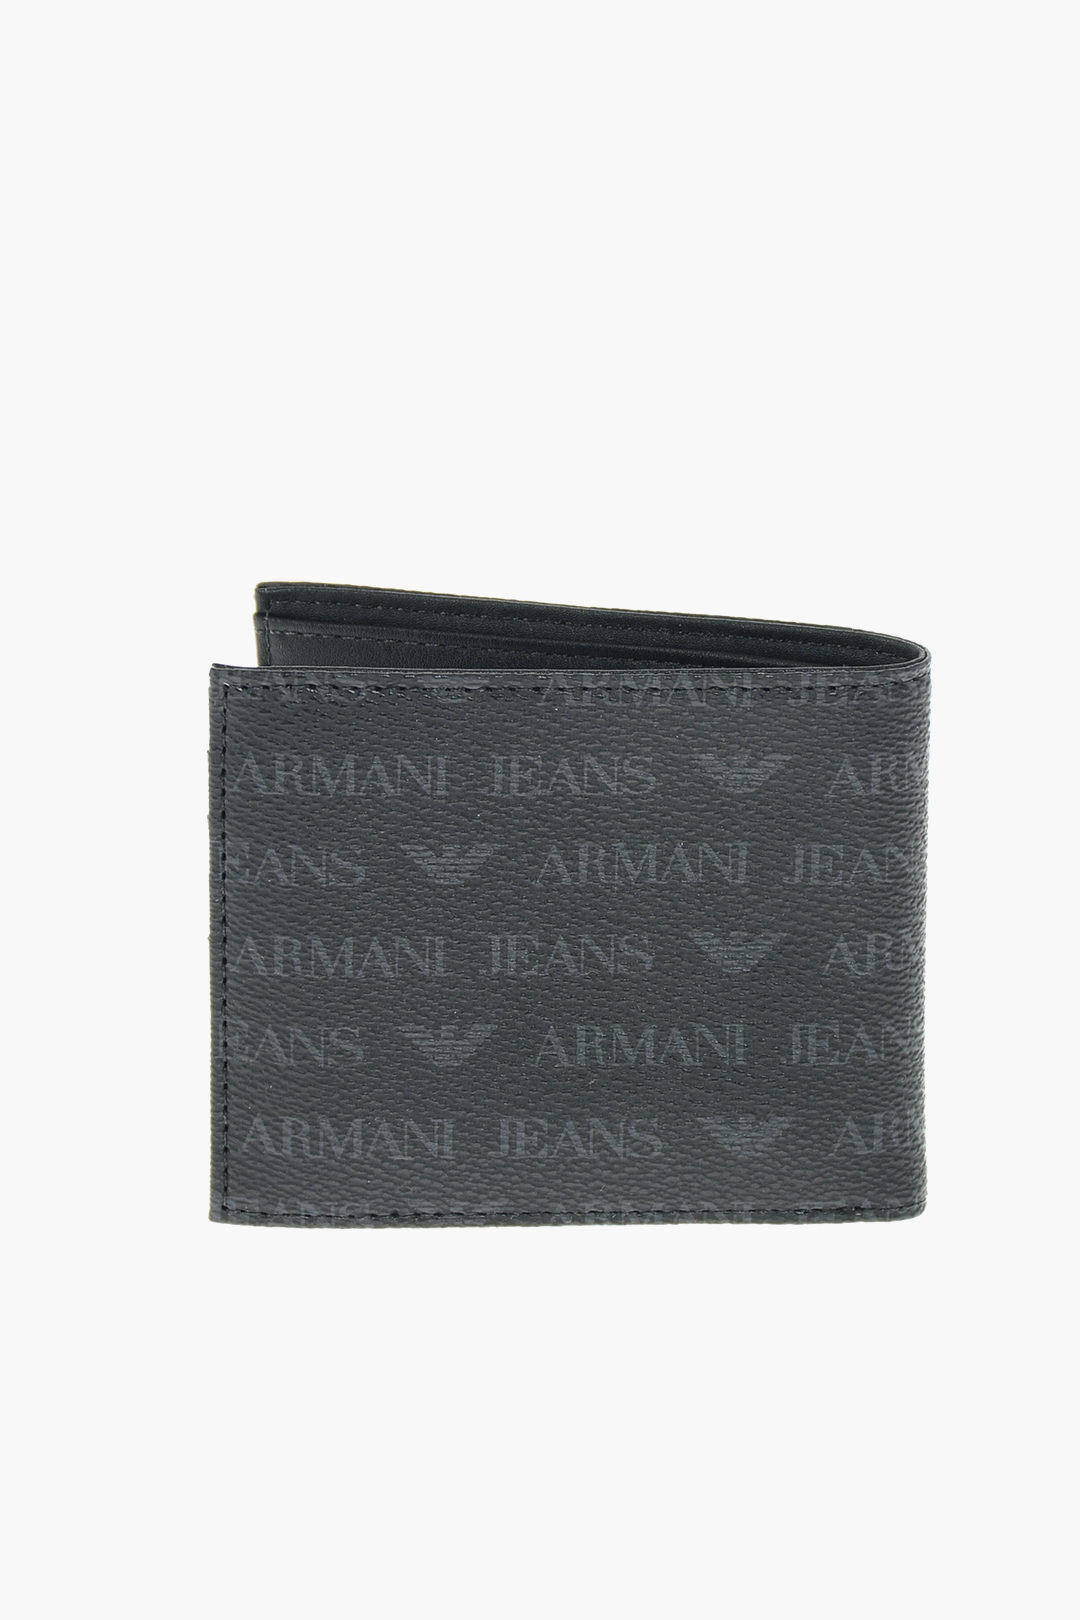 Armani Jeans Bags 922518-6A711 - Buy Online at Pettits, est 1860.